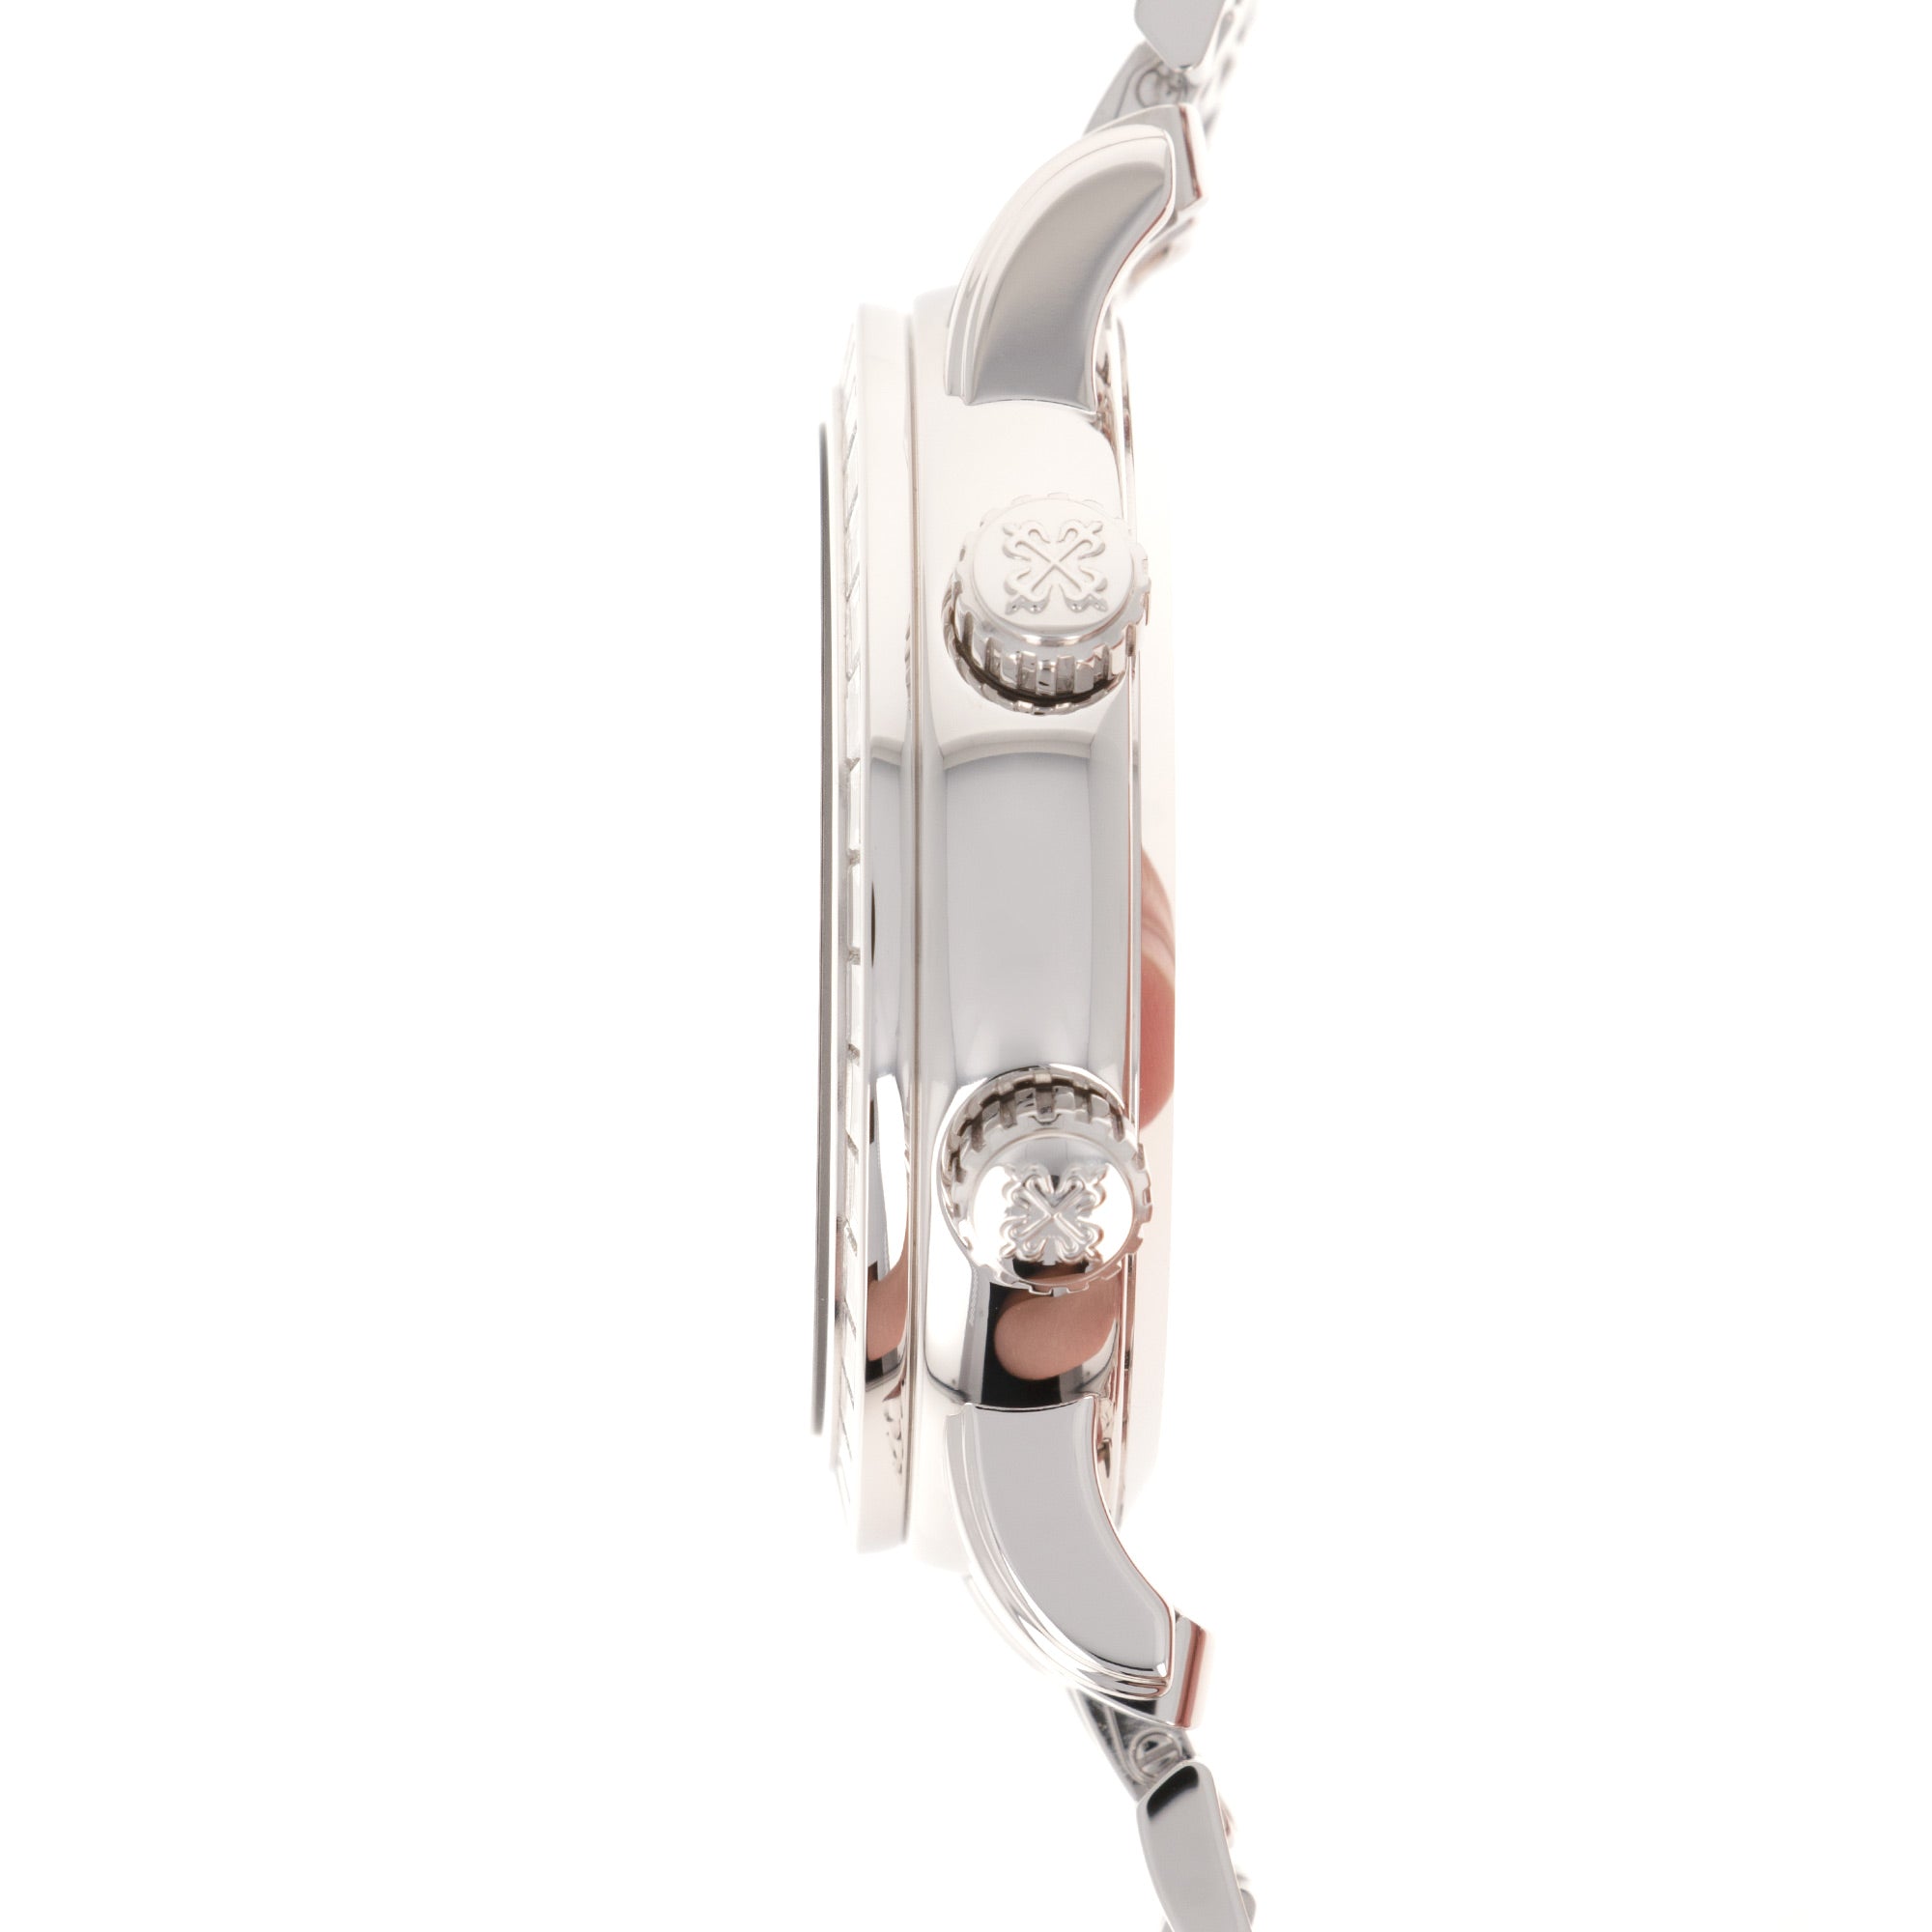 Patek Philippe - Patek Philippe White Gold Celestial Baguette Diamond Watch Ref. 6104 - The Keystone Watches